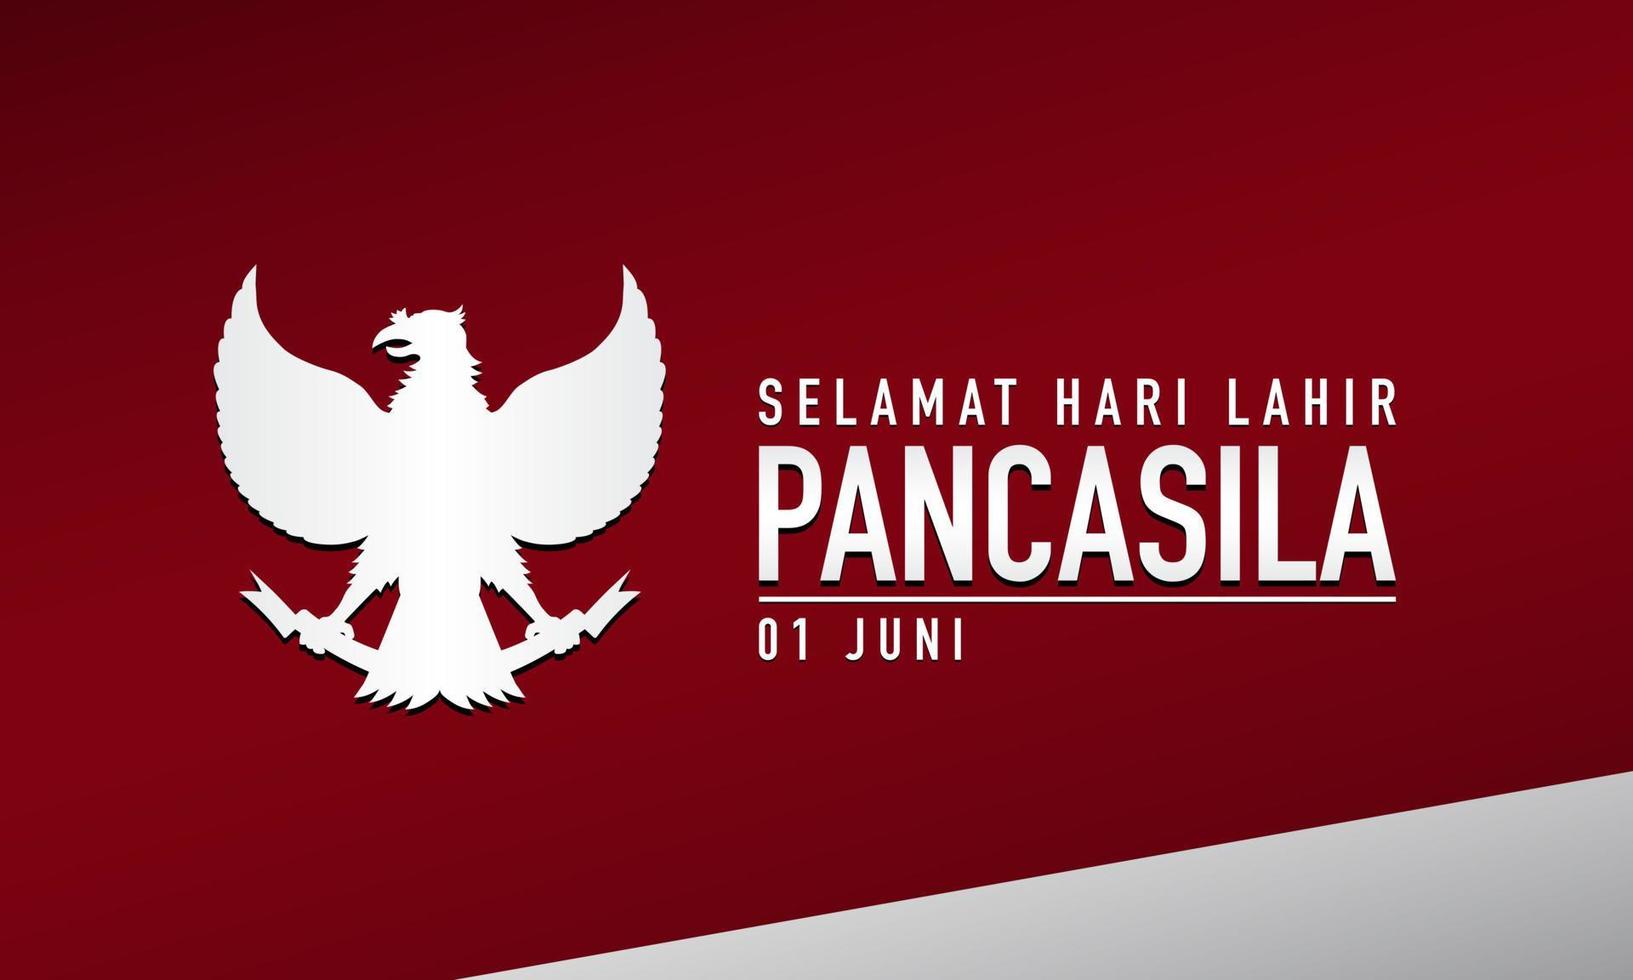 Indonesian Holiday Pancasila Day Illustration. vector